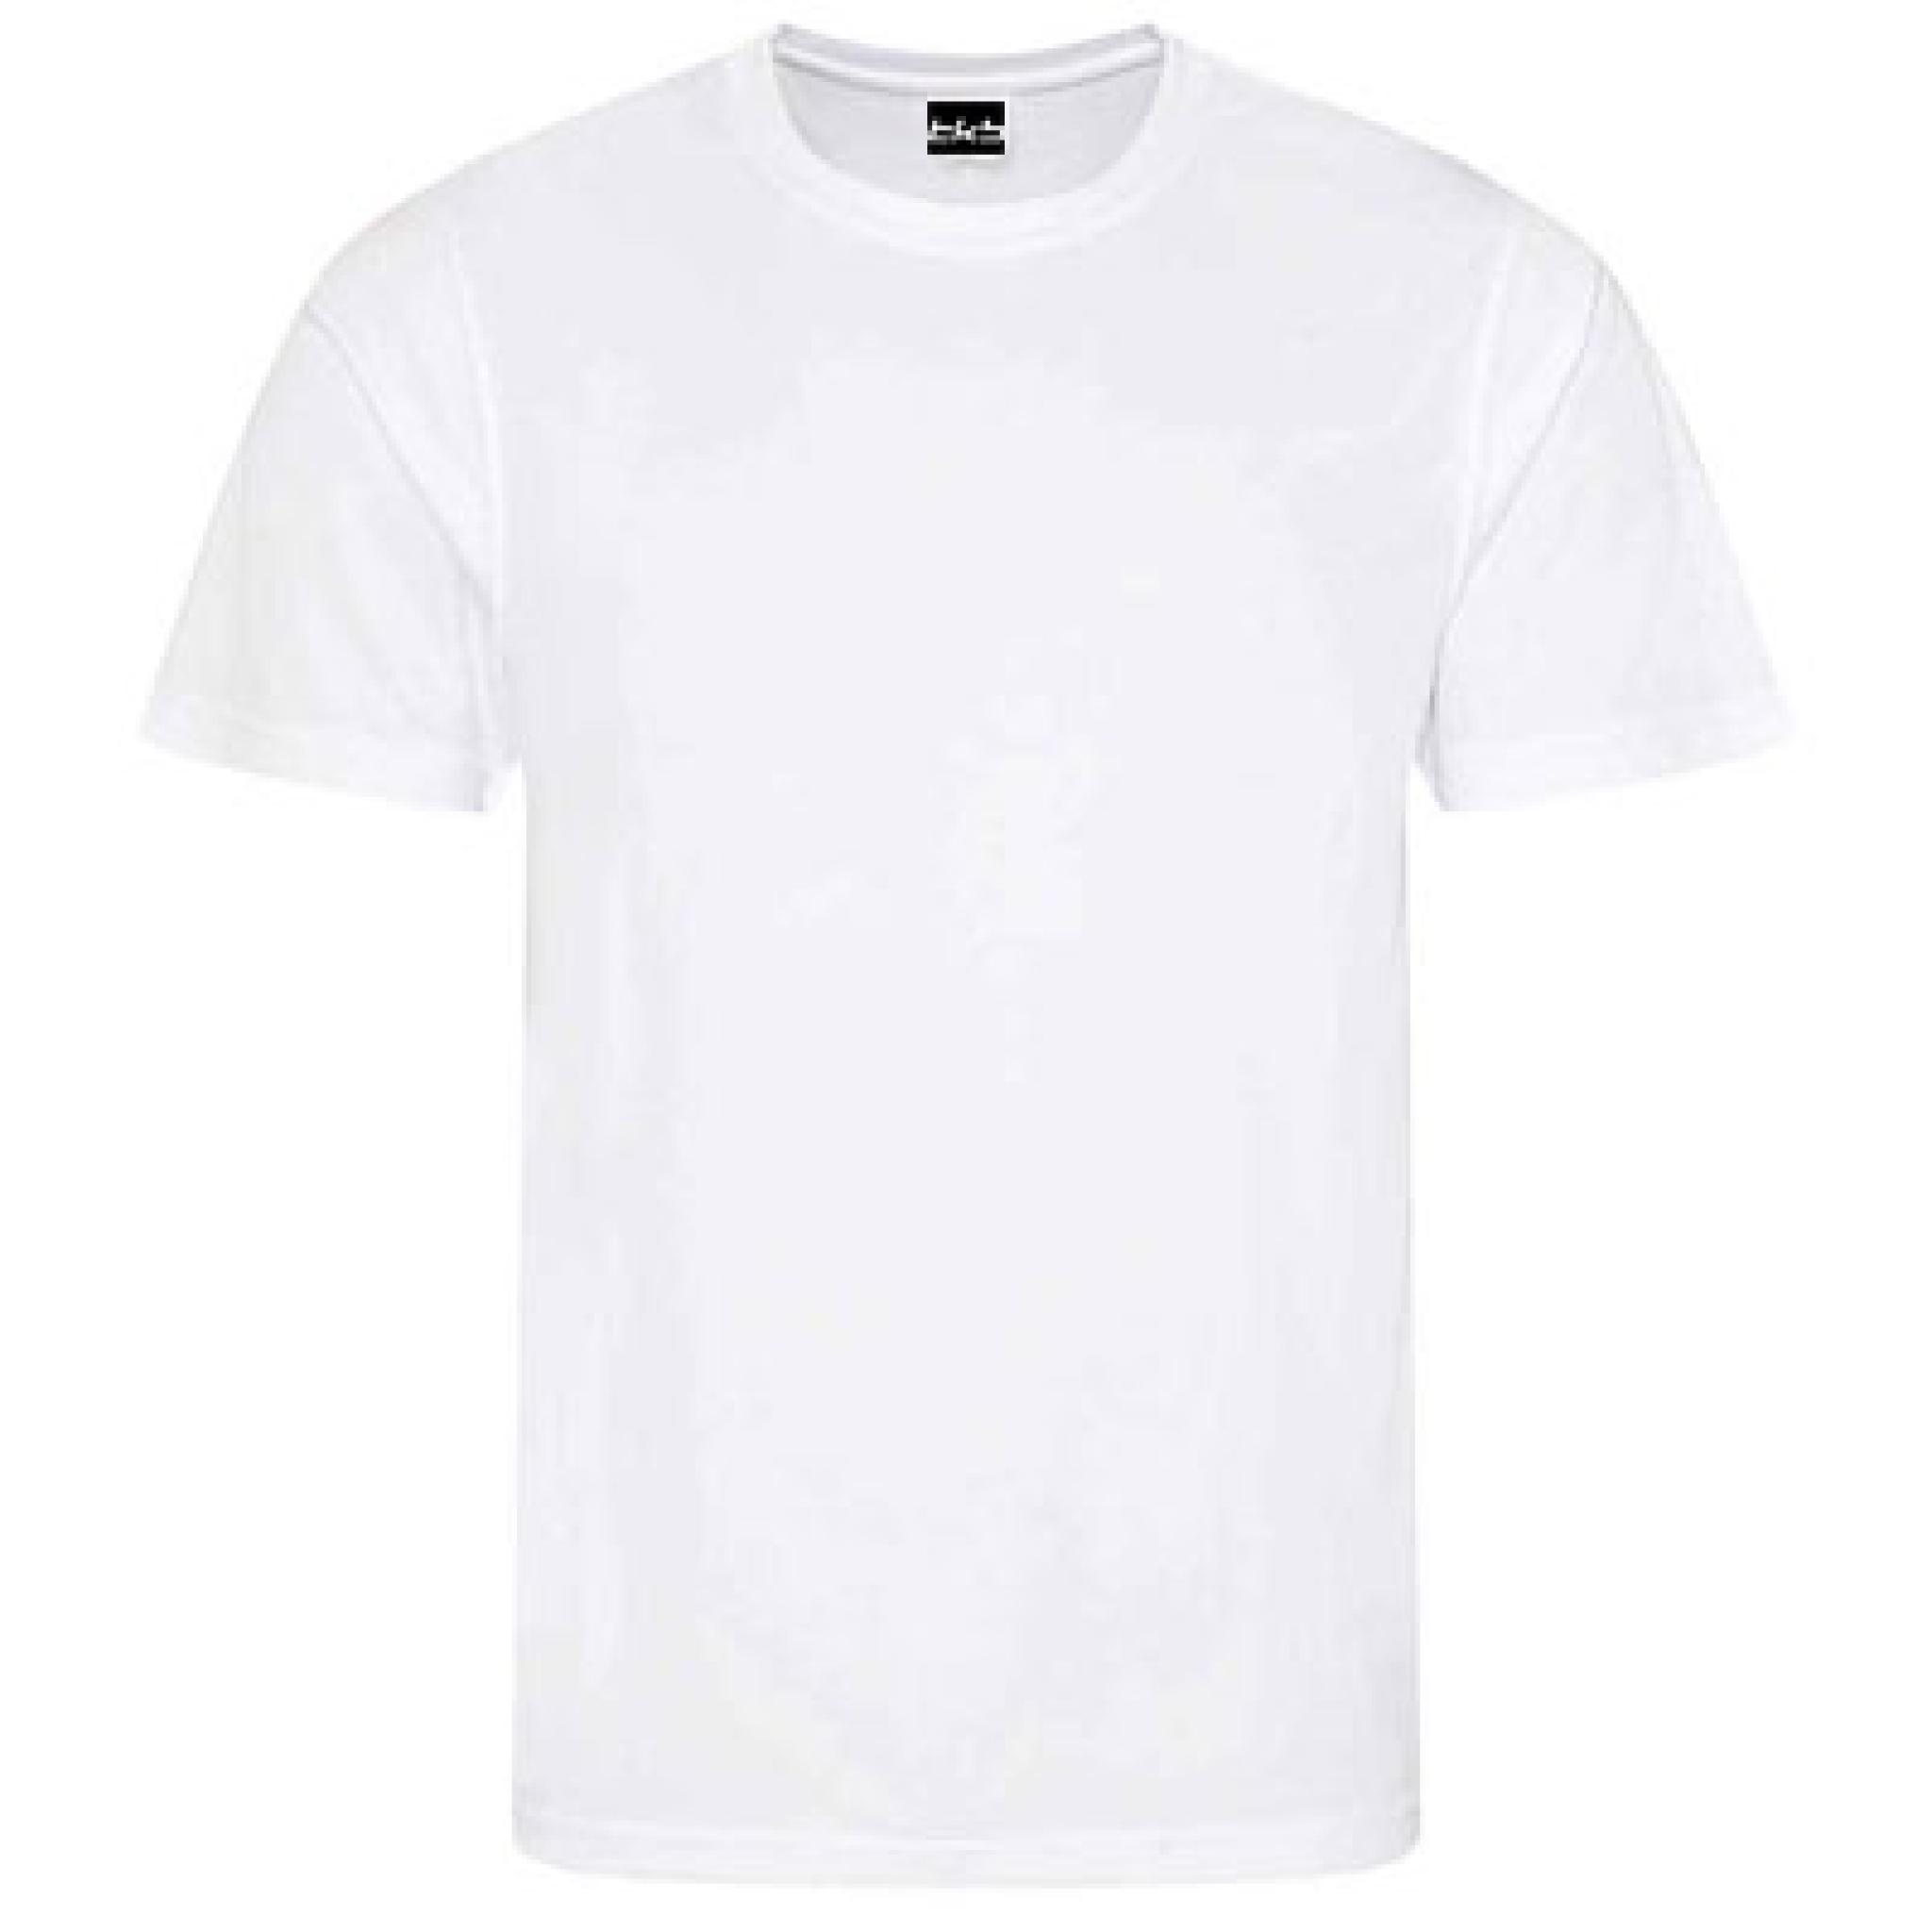 SJWMS Sports/PE T-Shirt Yr7 Compulsory